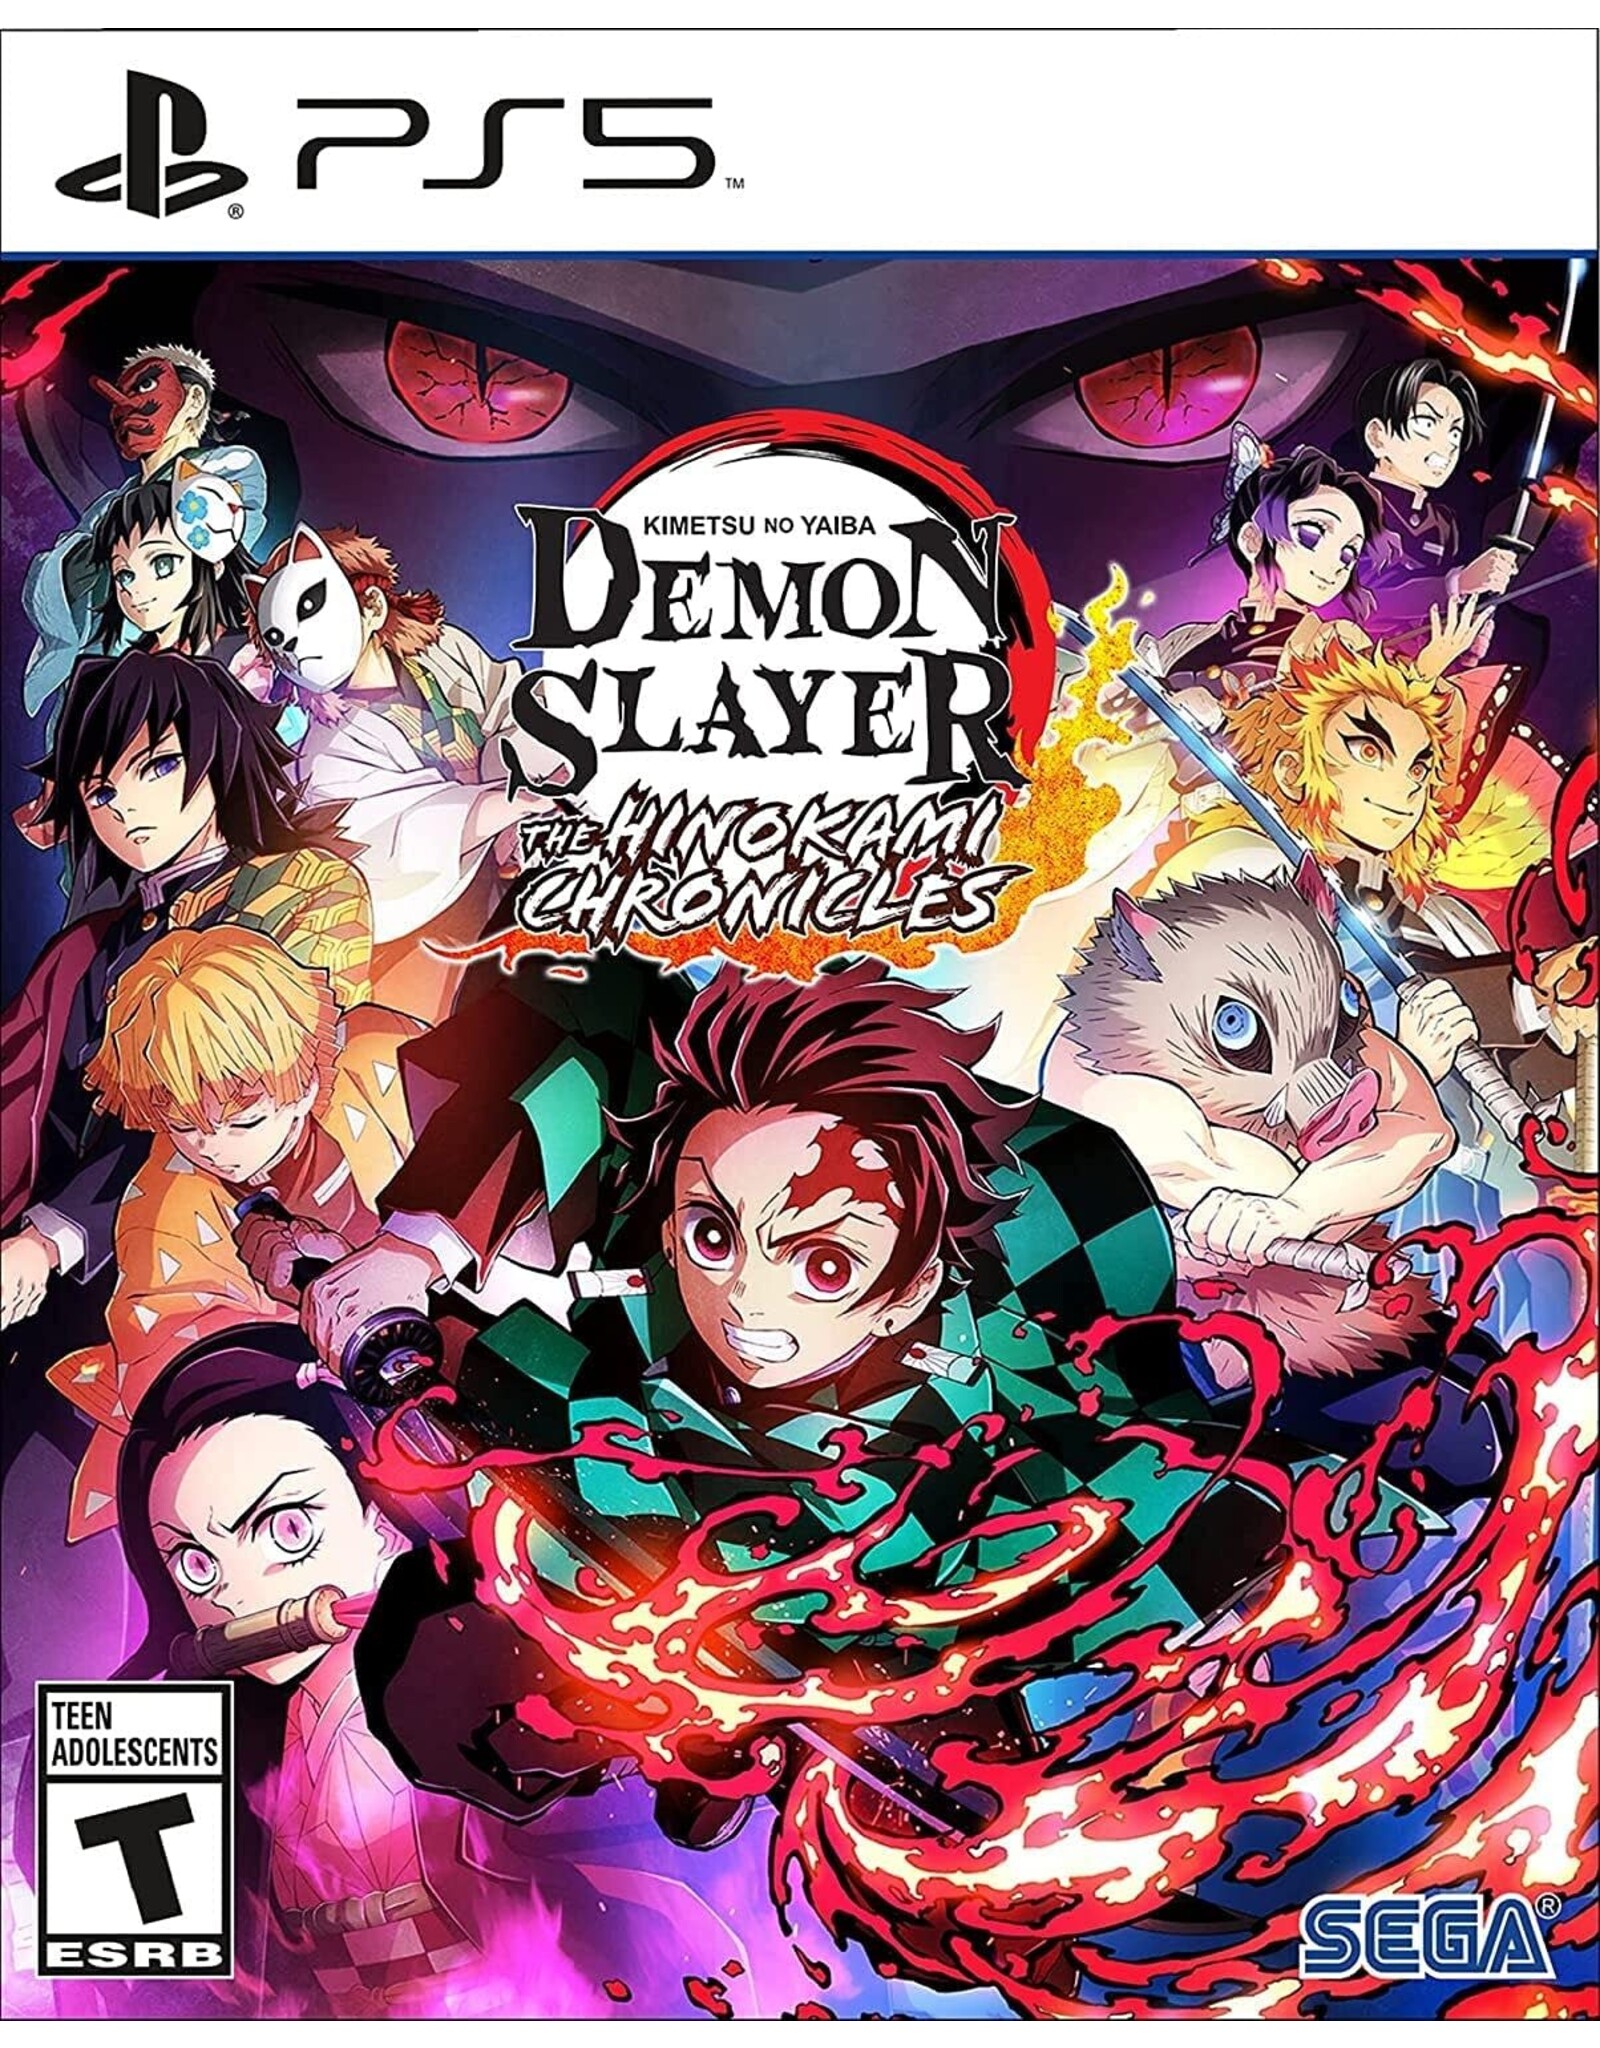 Playstation 5 Demon Slayer Kimetsu No Yaiba The Hinokami Chronicles (PS5)